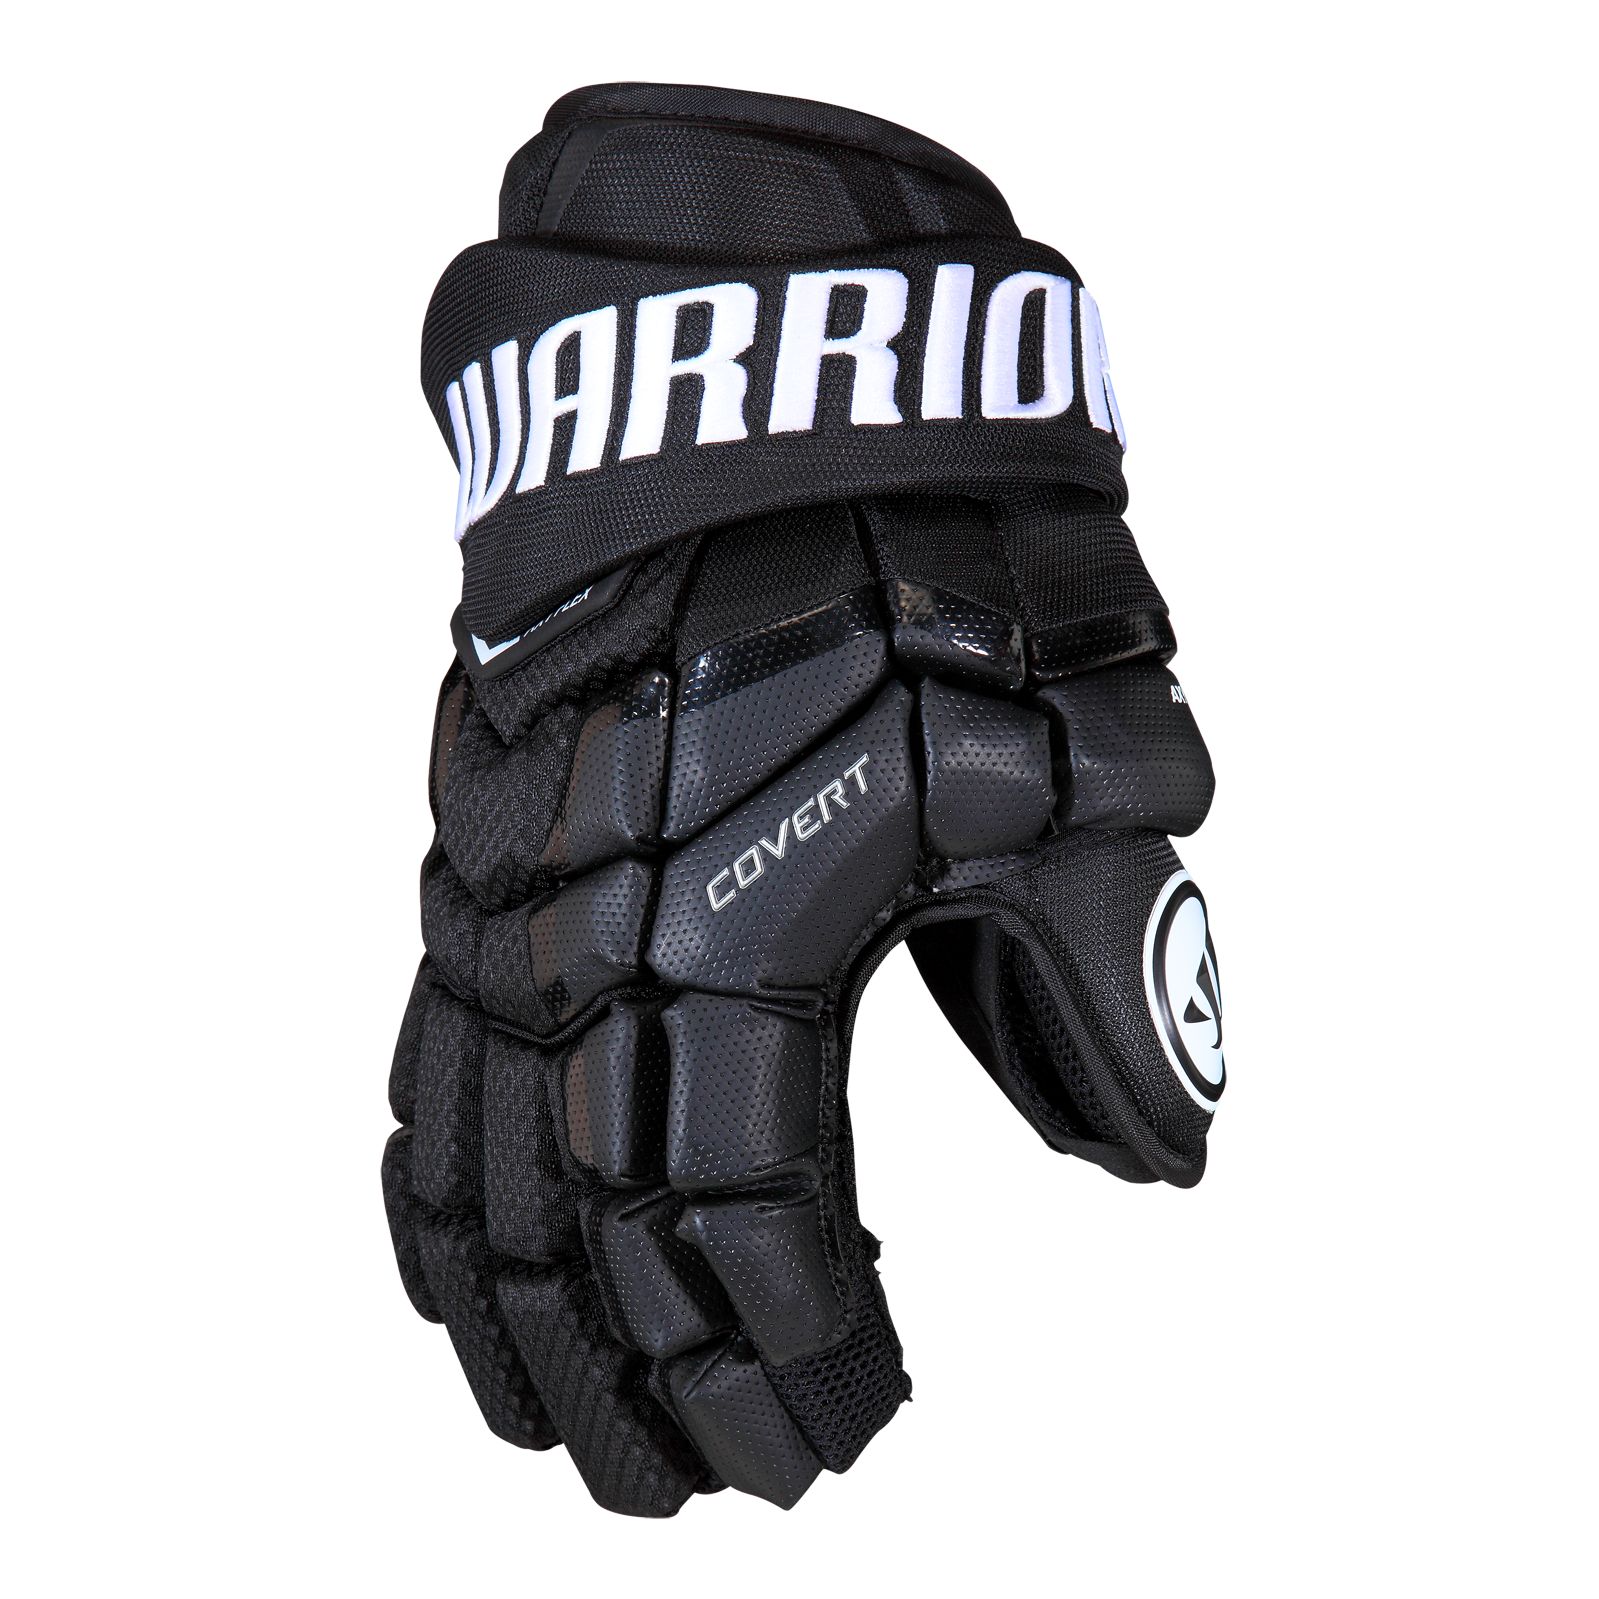 Covert QRL Senior Glove, Black with White image number 0